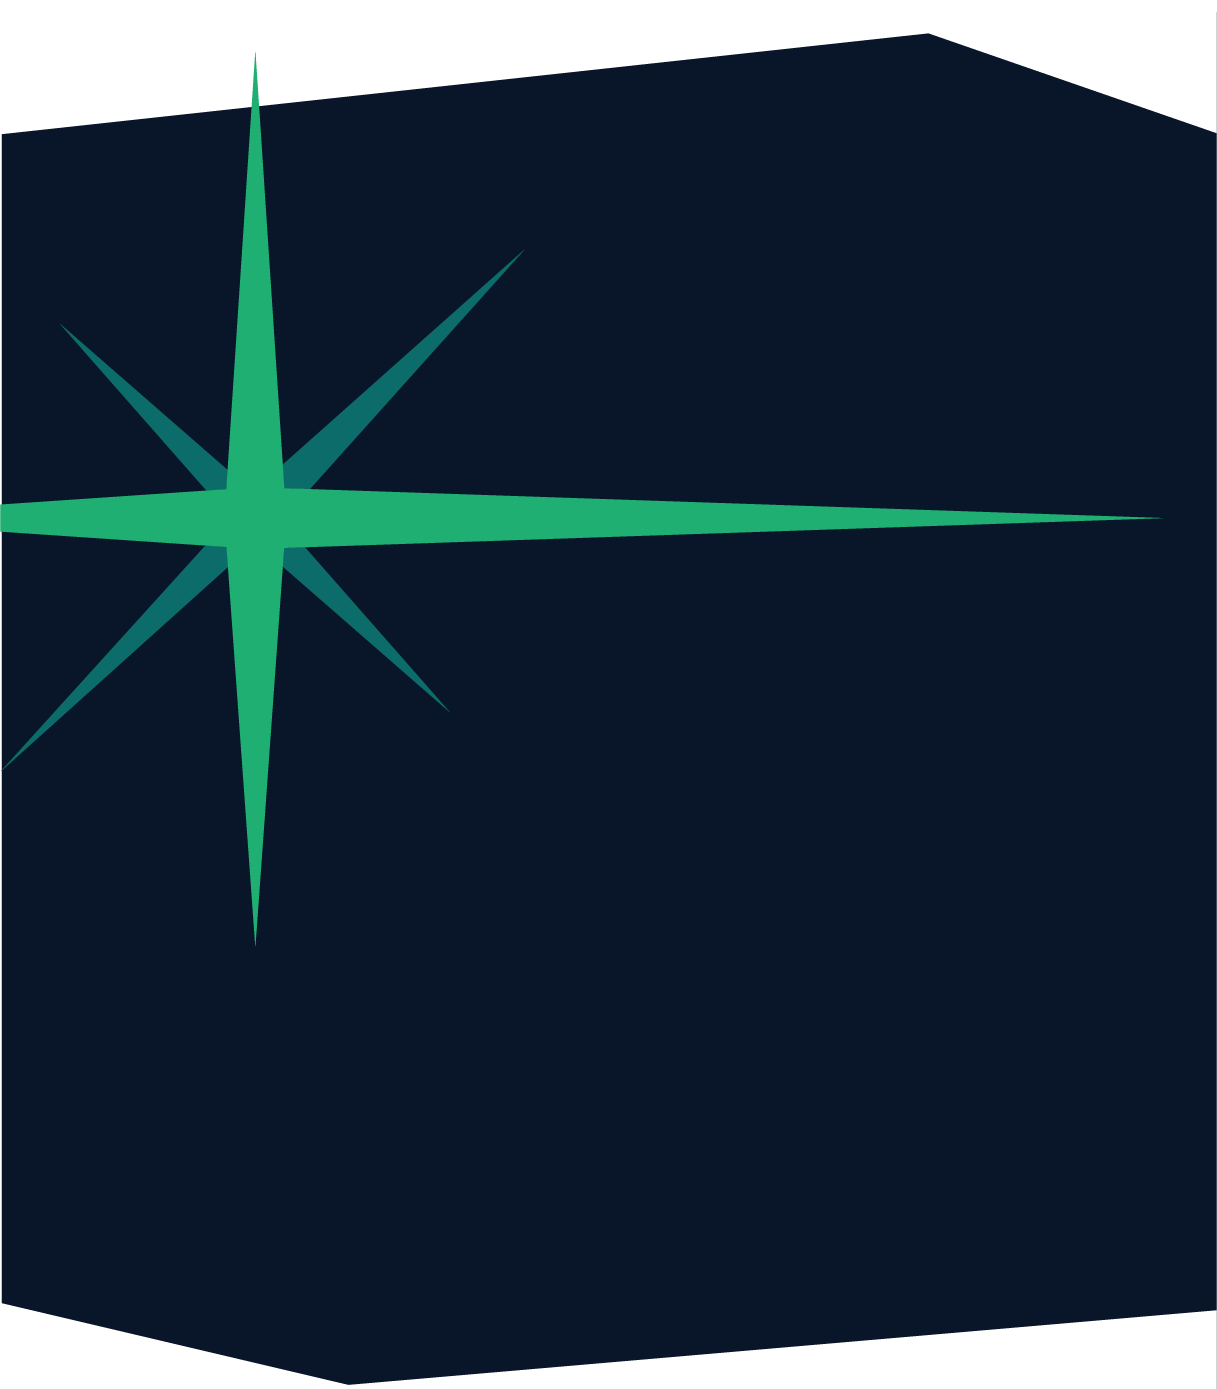 Avior Wealth star logo with navy background